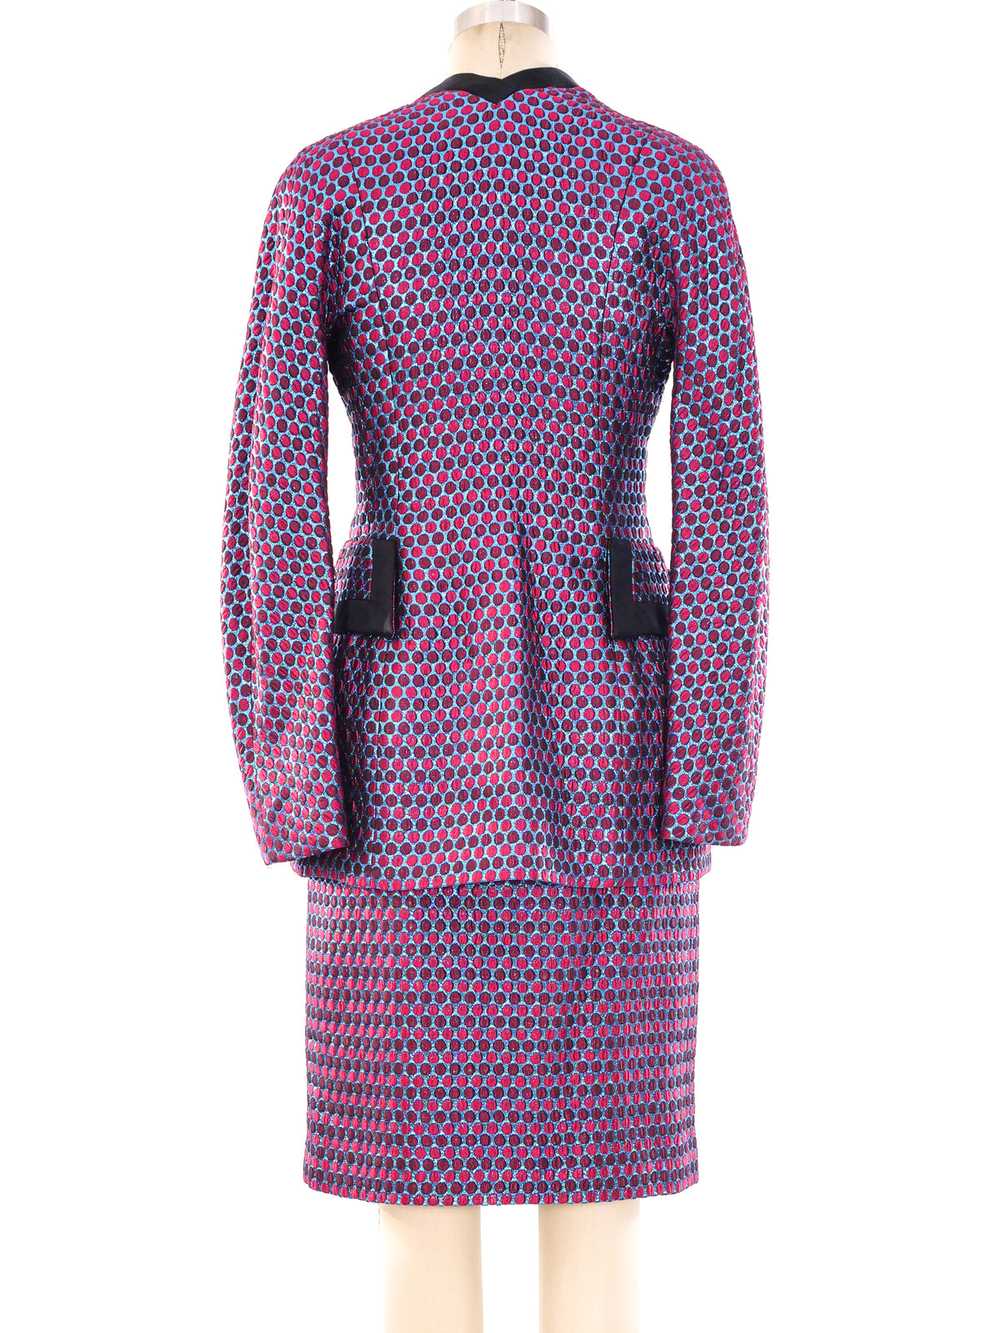 Galanos Tailored Iridescent Brocade Skirt Suit - image 3